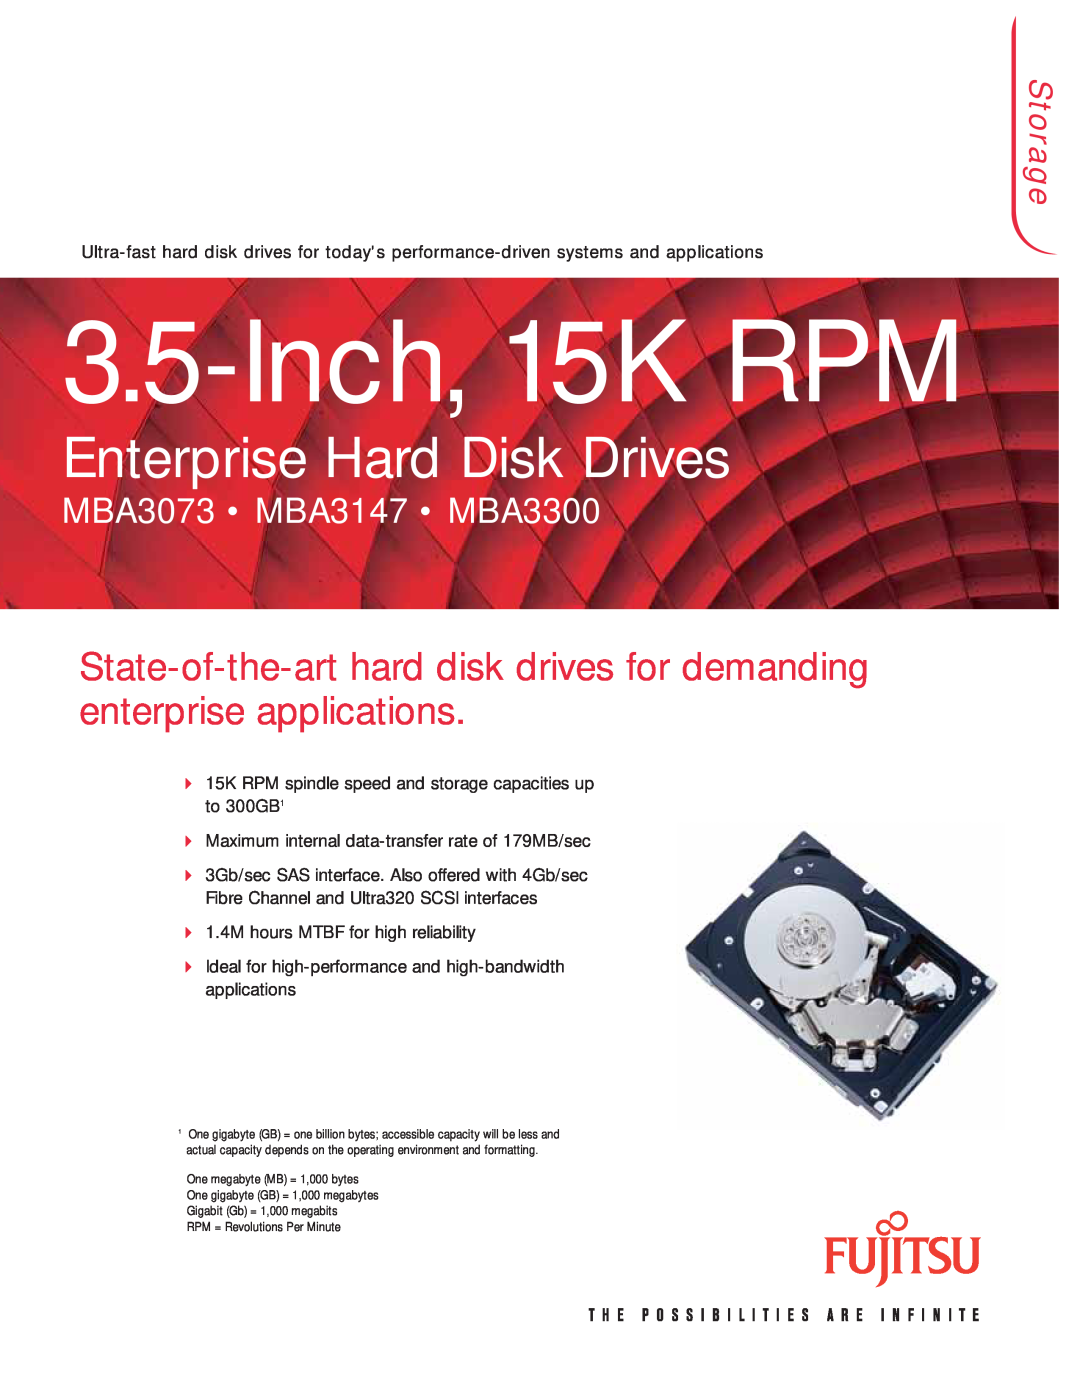 Fujitsu manual Inch, 15K RPM, Enterprise Hard Disk Drives, Stora ge, MBA3073 MBA3147 MBA3300 